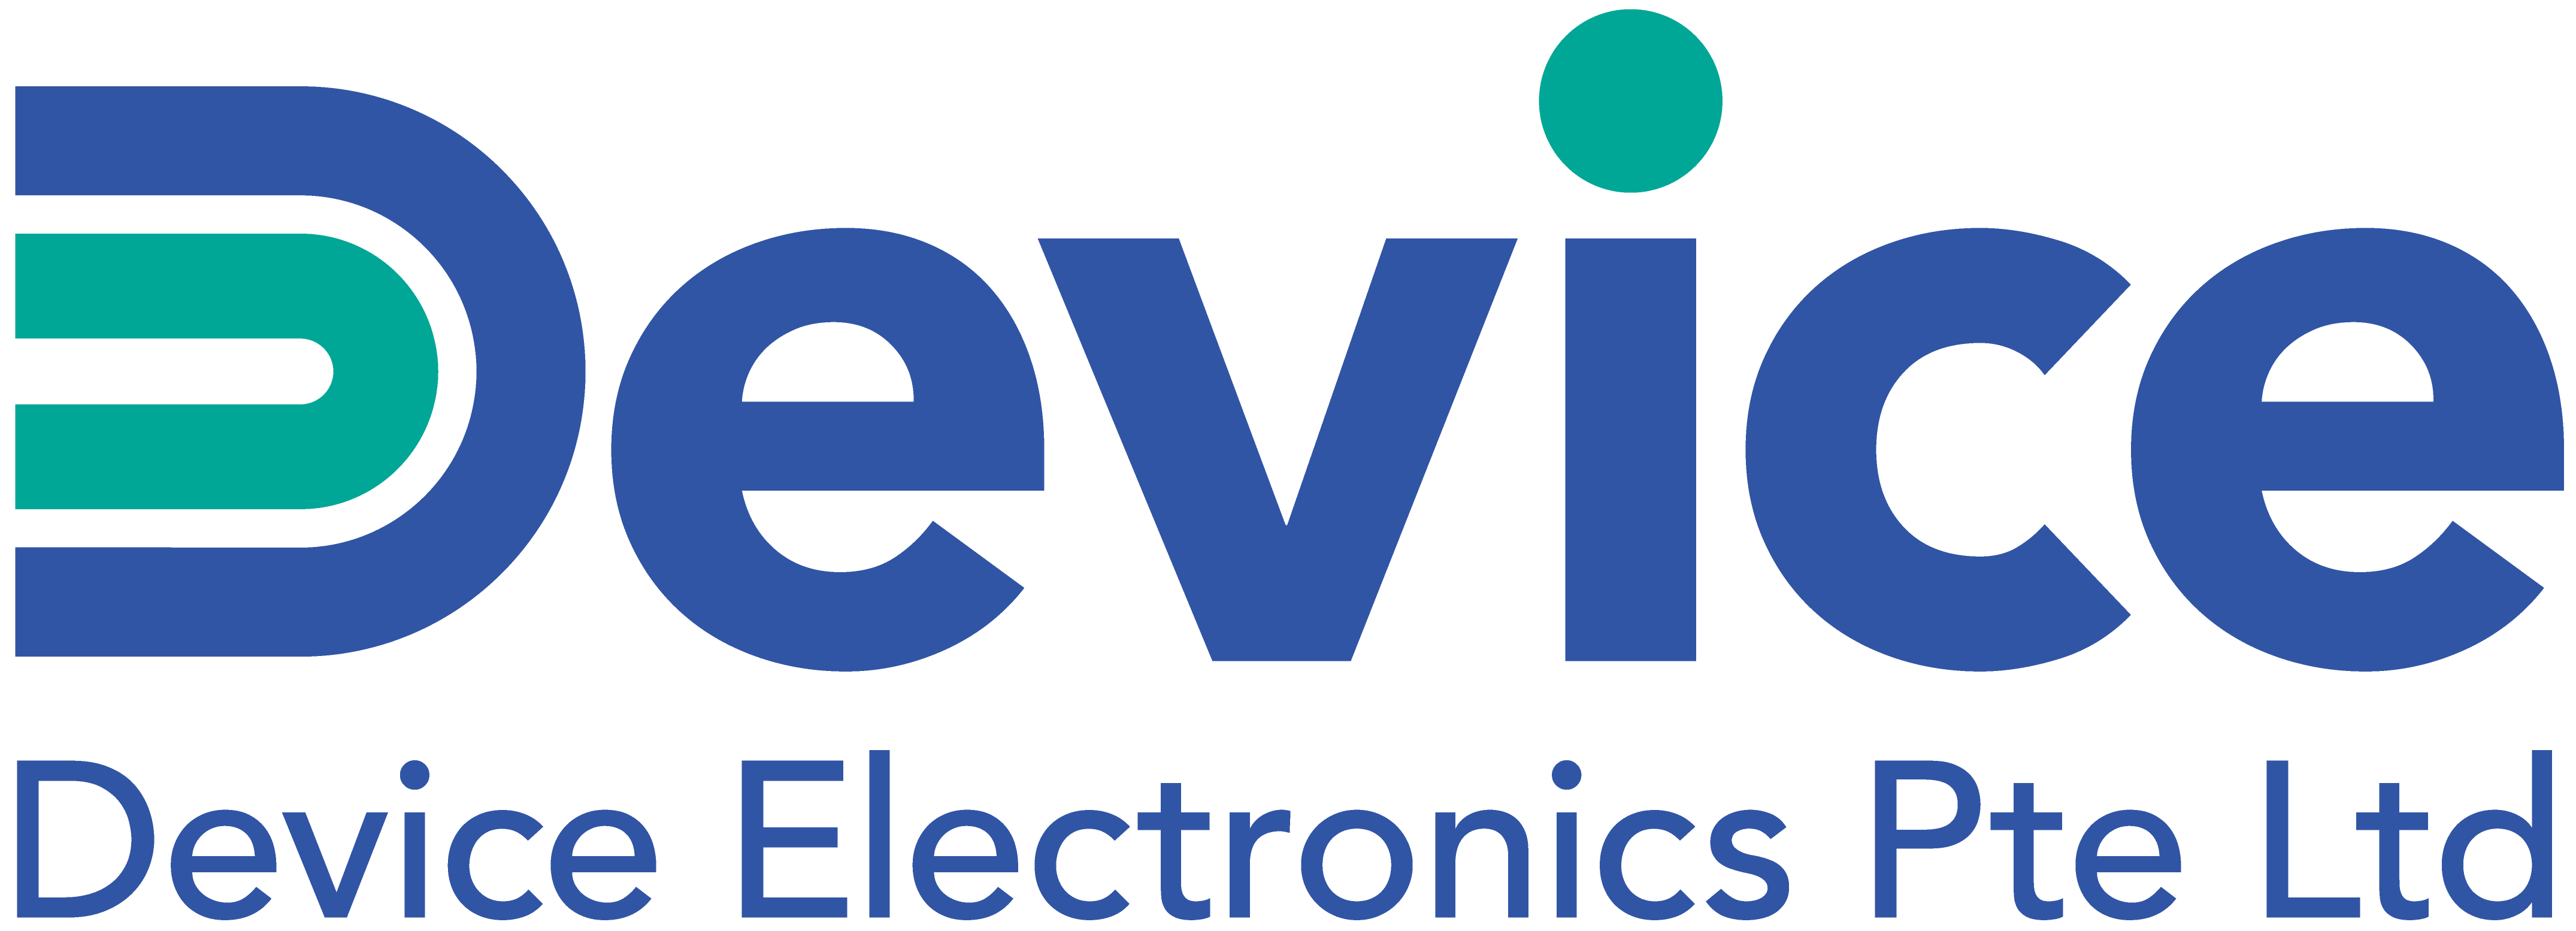 Device Electronics Pte. Ltd.